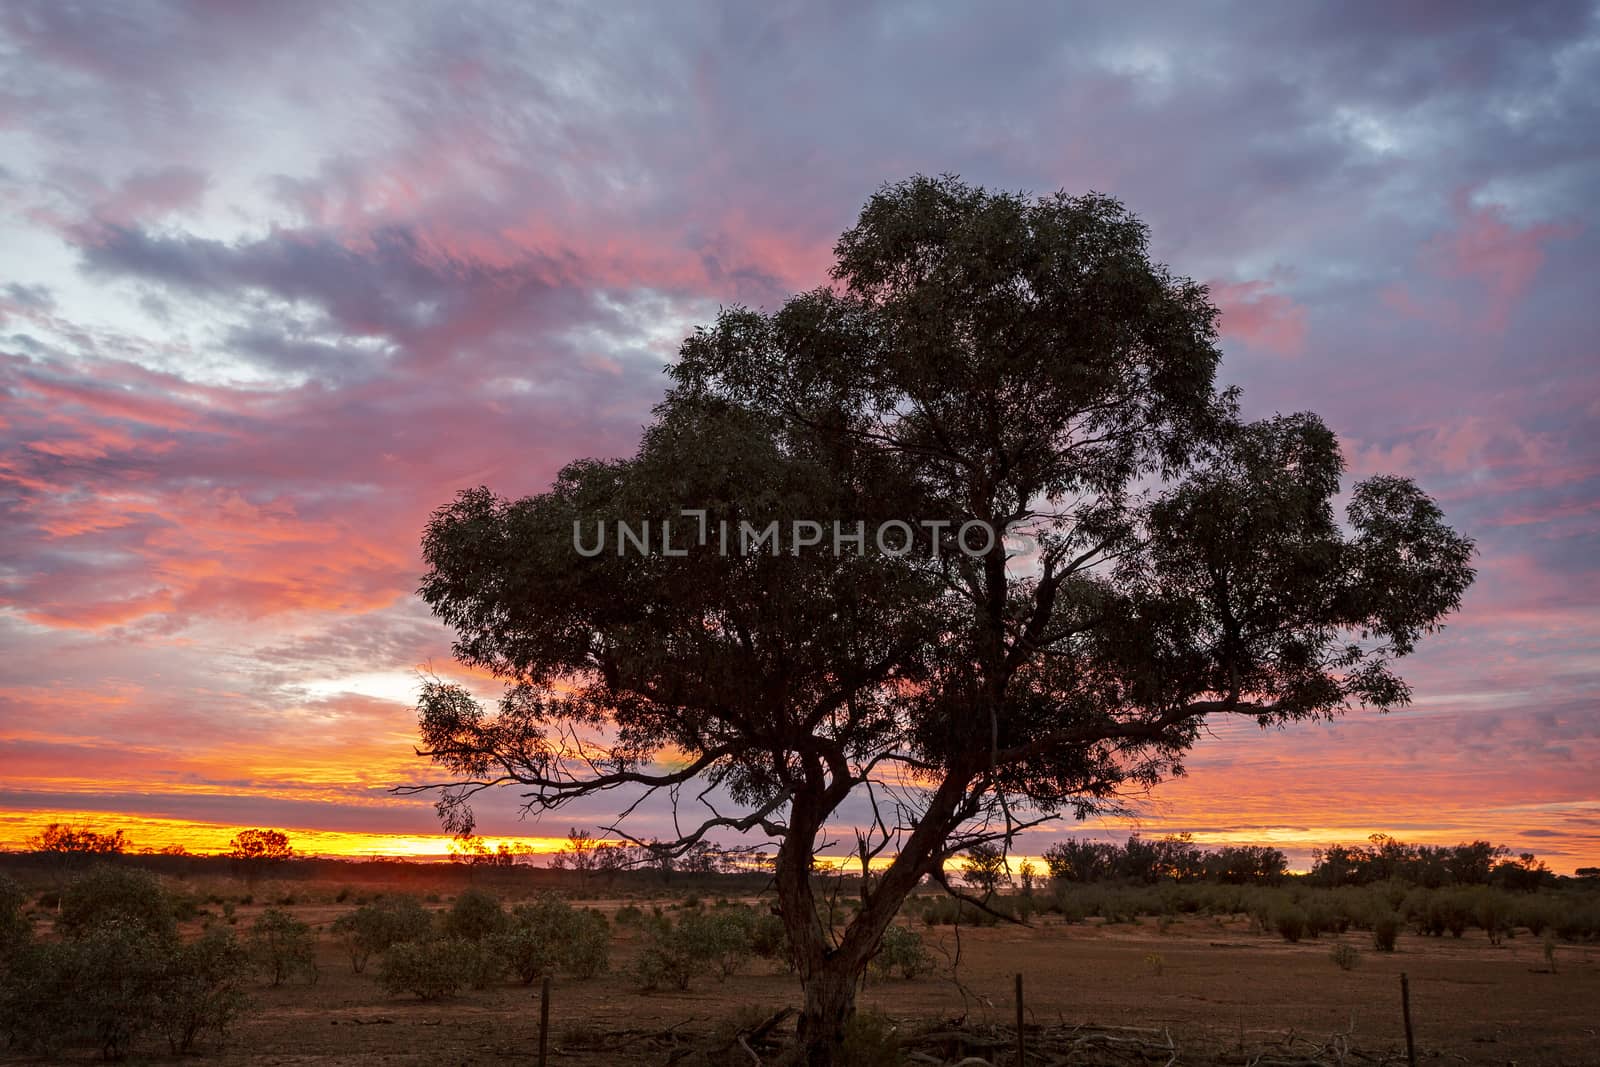 Outback sunrise landscape over dry scrubby farm land fields